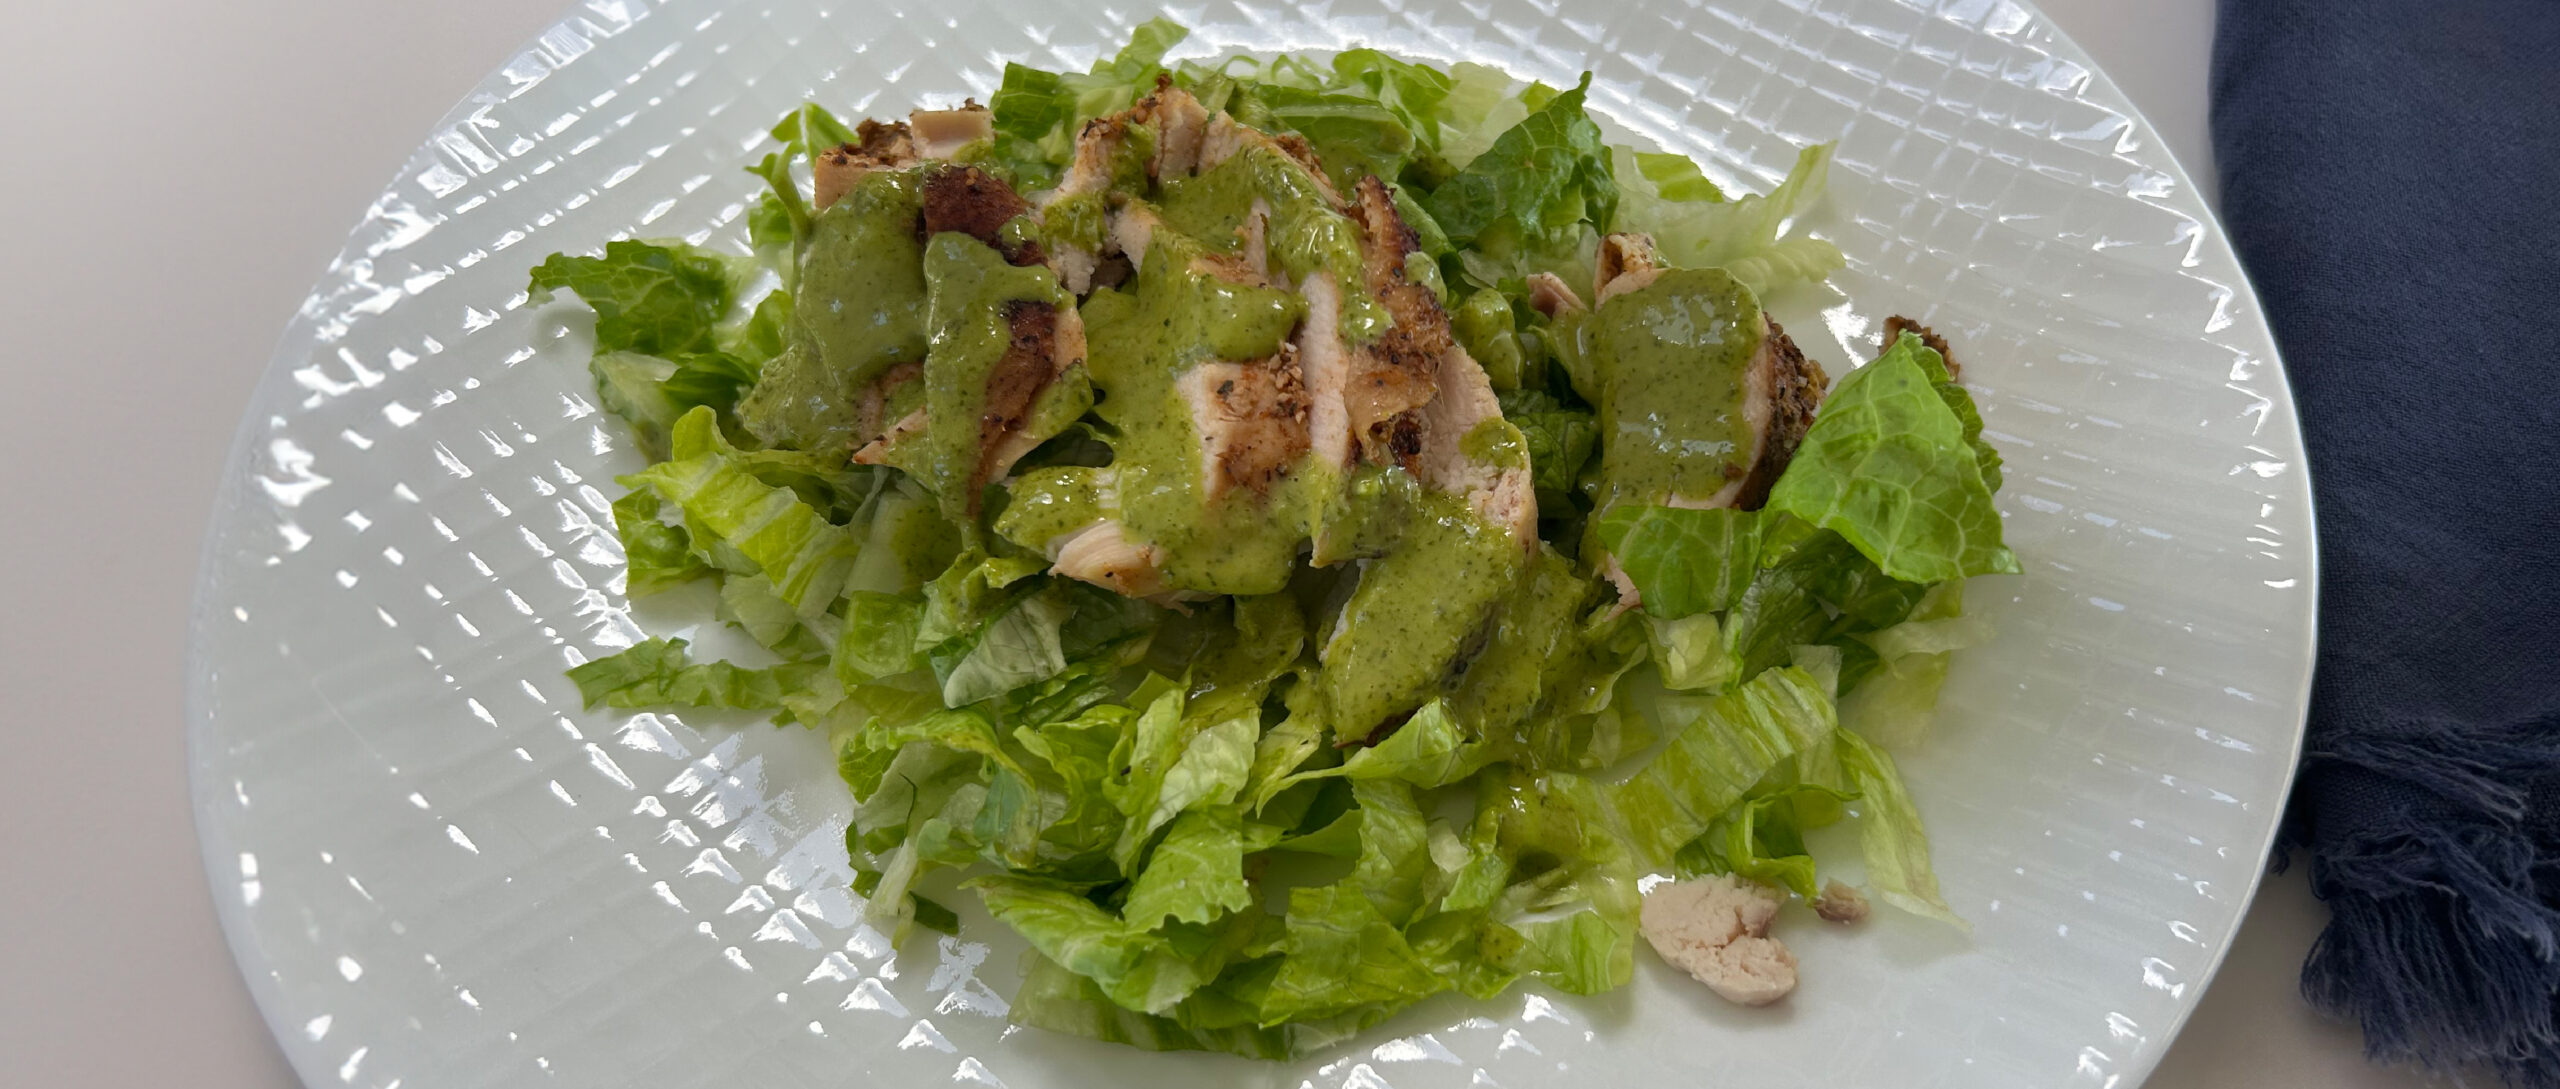 Cilantro Lime Grilled Chicken Salad Recipe